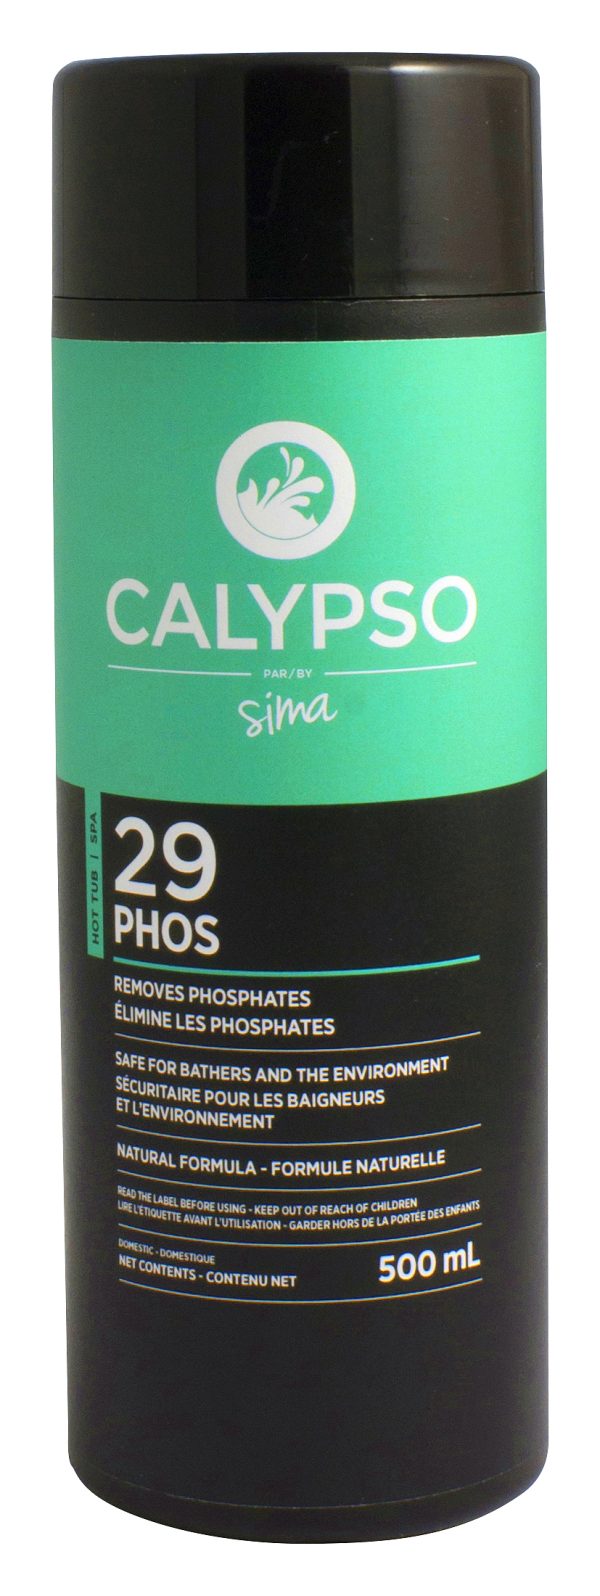 Calypso Phos #29 500ML - Spa products - Spa maintenance - Sima POOLS & SPAS